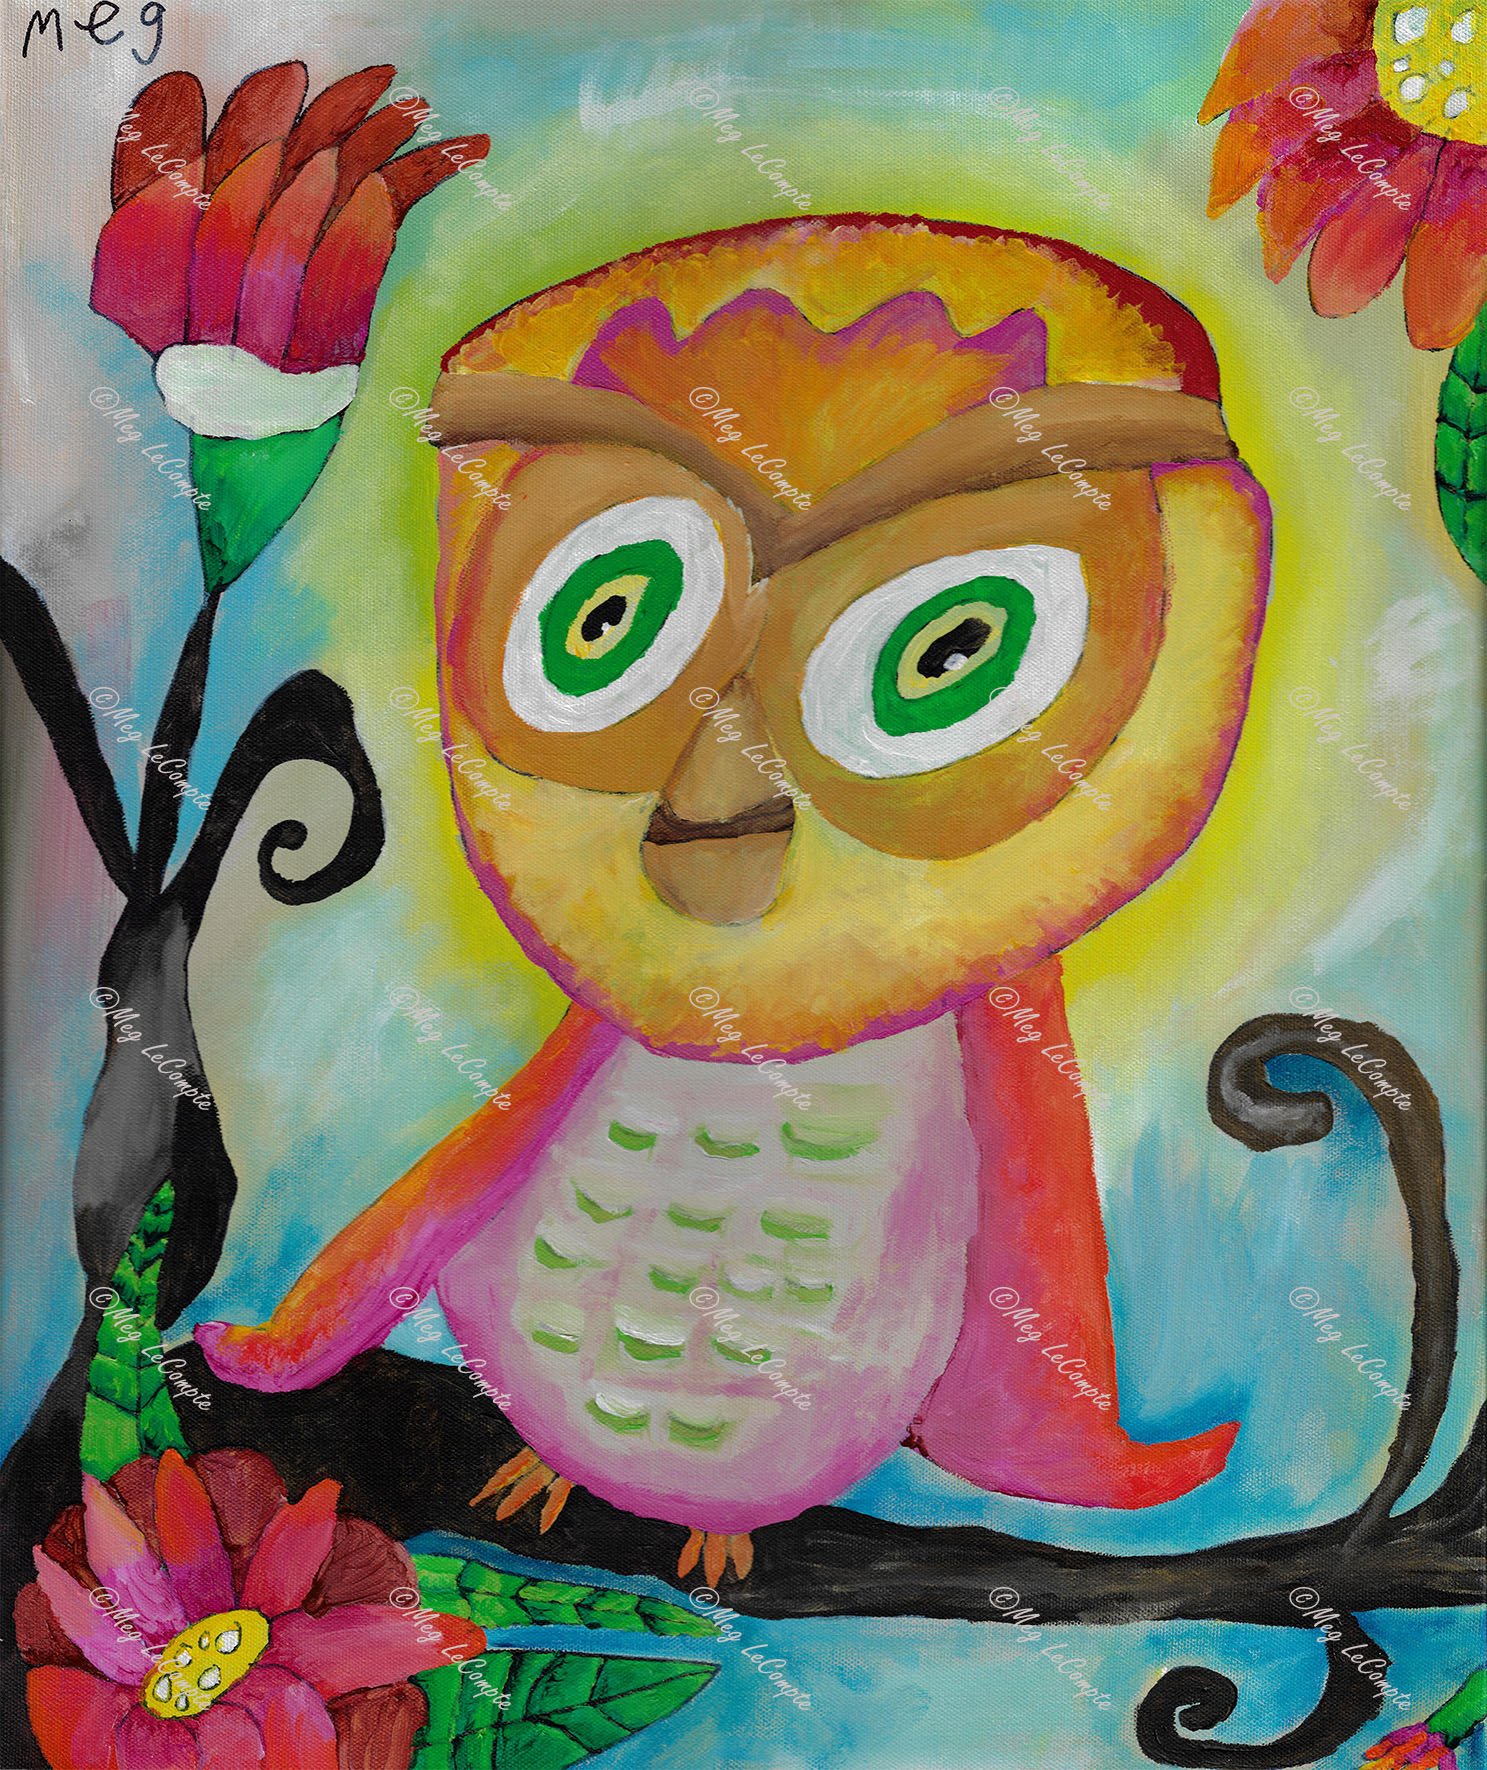 The Magical Owl.watermark.jpg